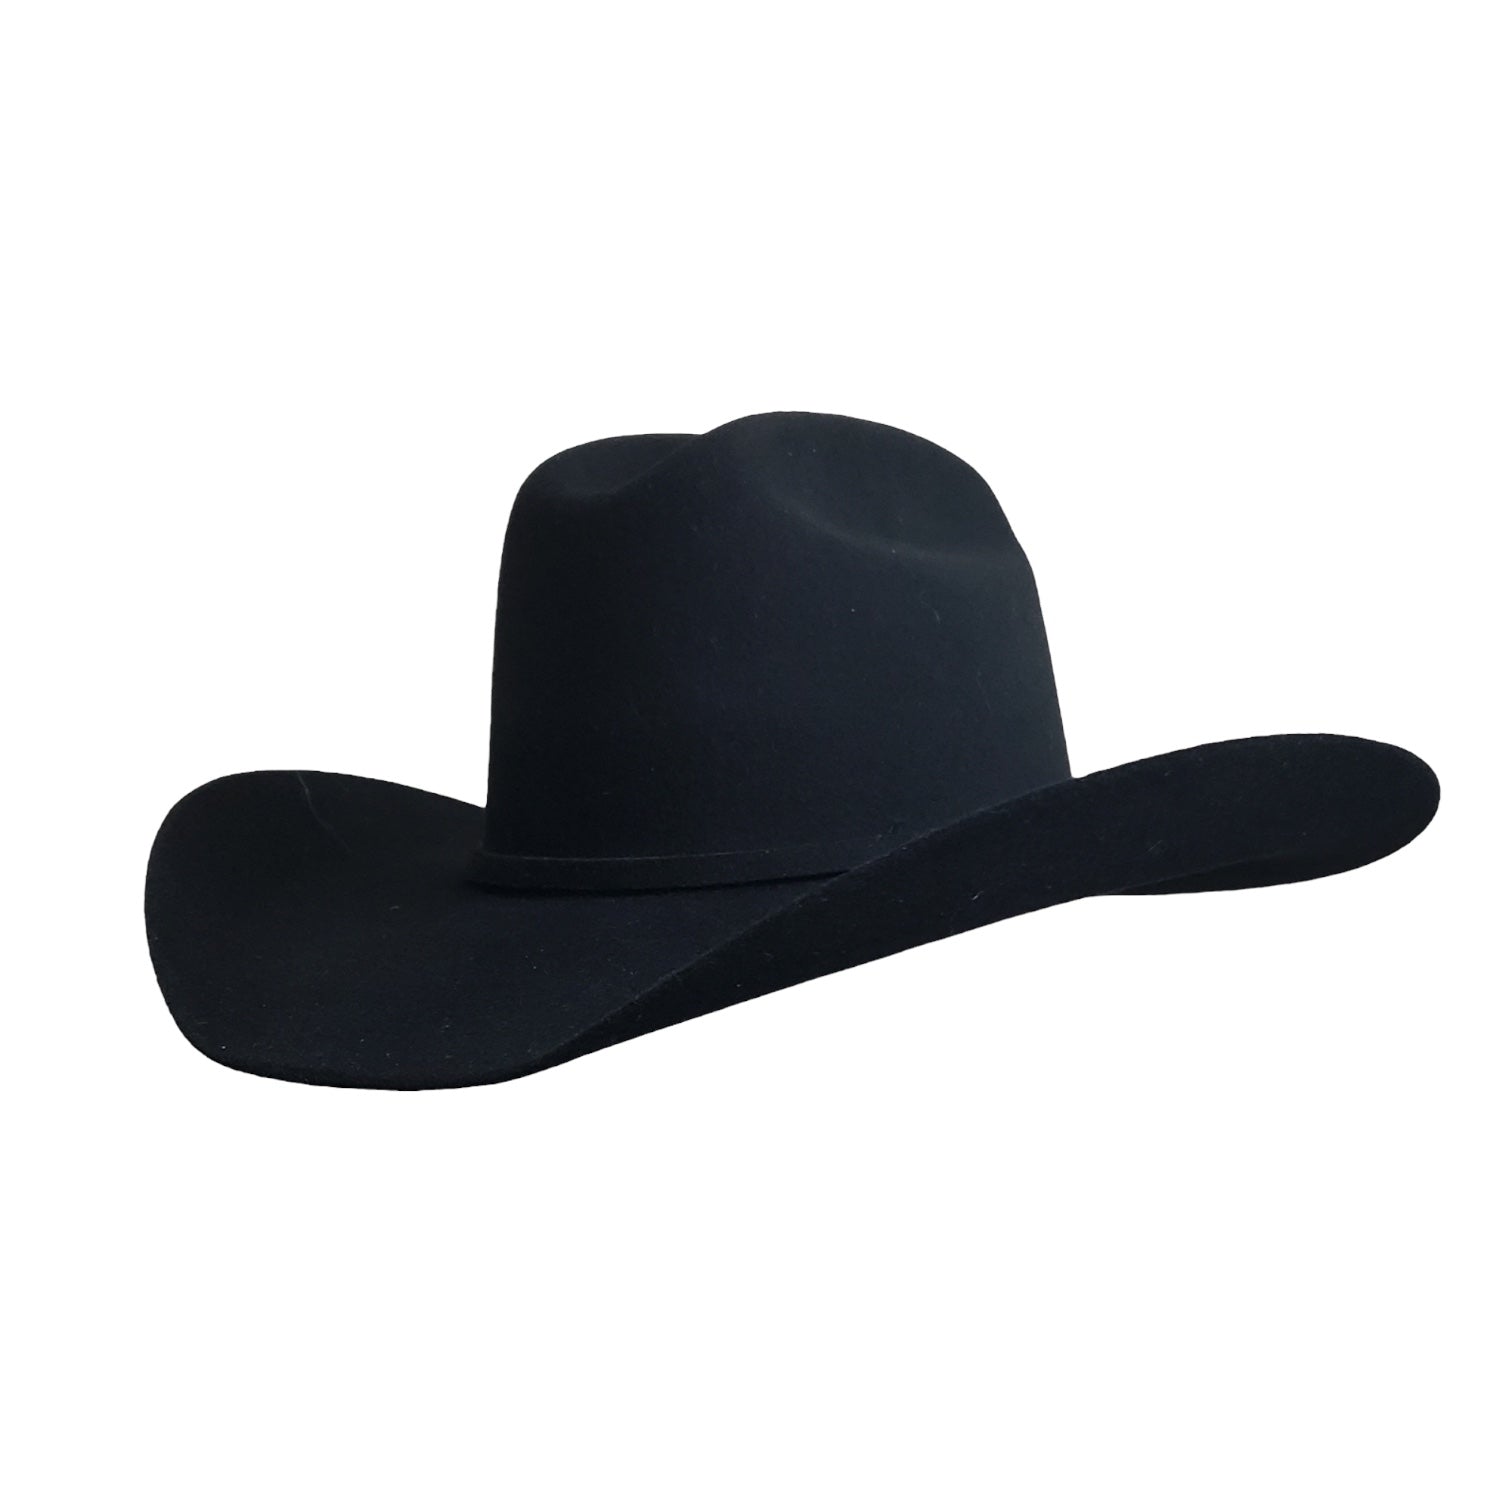 Yellowstone Black Felt Cowboy Hat 7-7/8